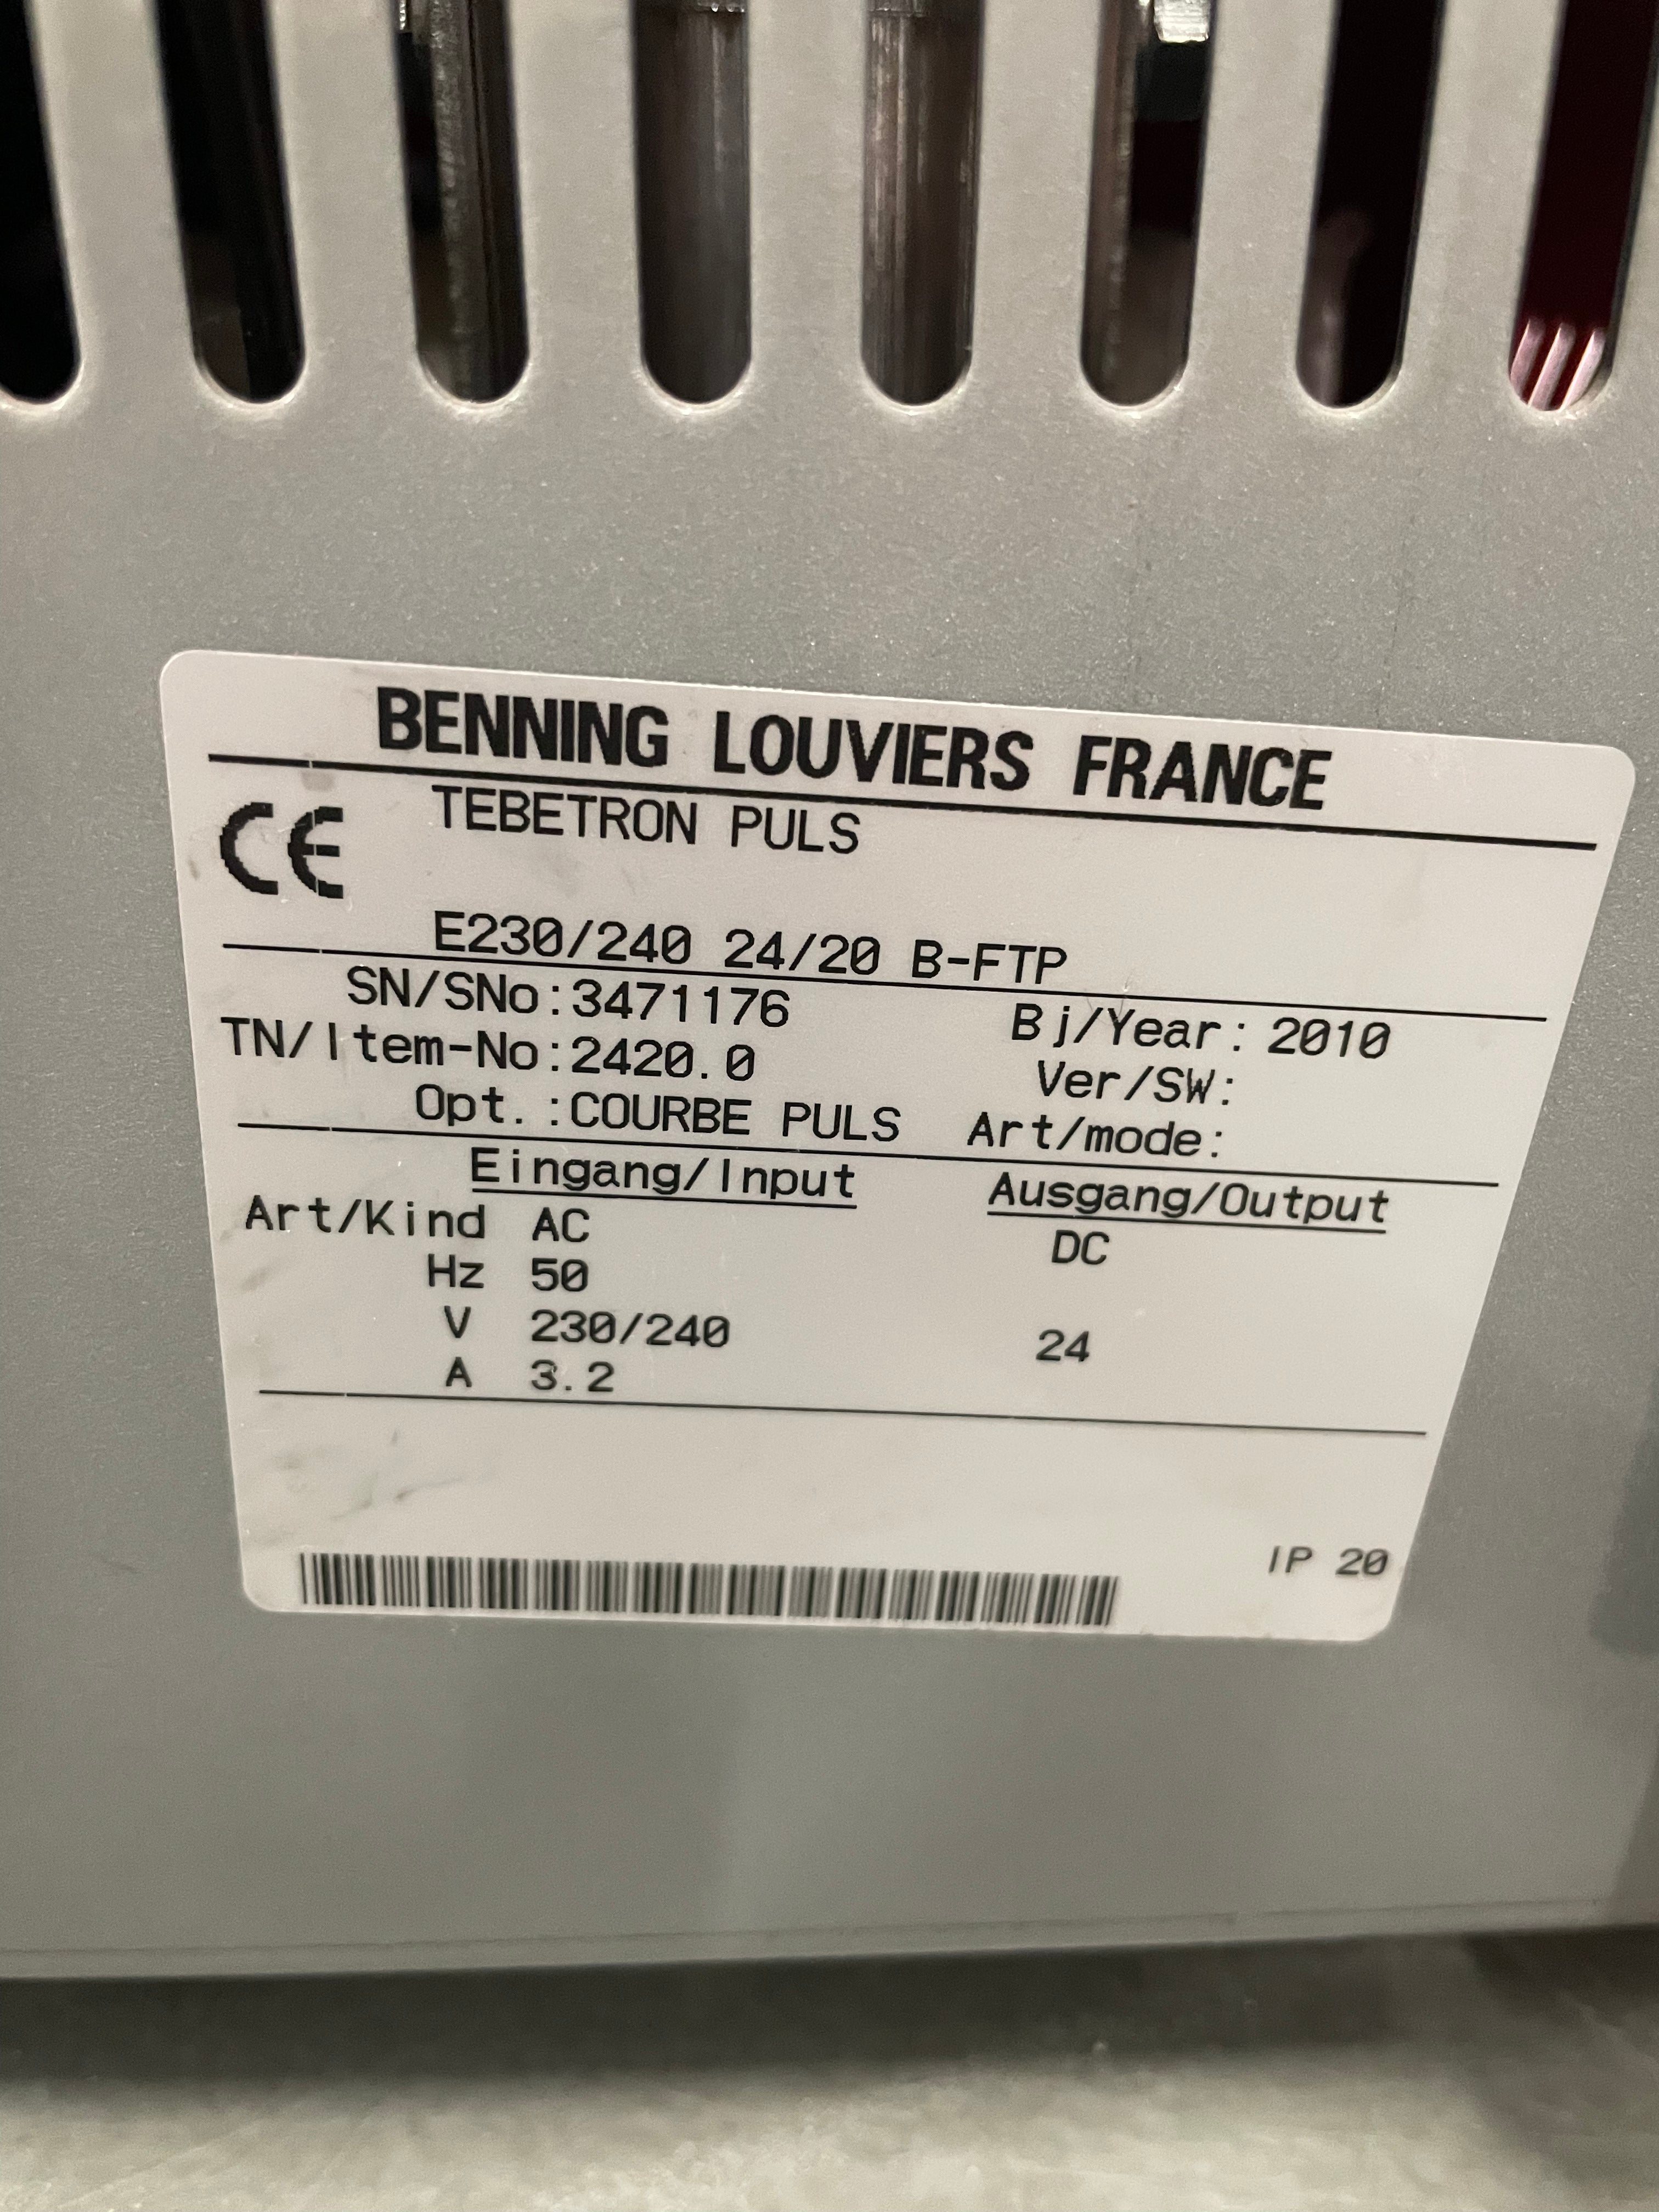 Tebetron Puls / Benning E230/240 24/20 B-FTP battery charger